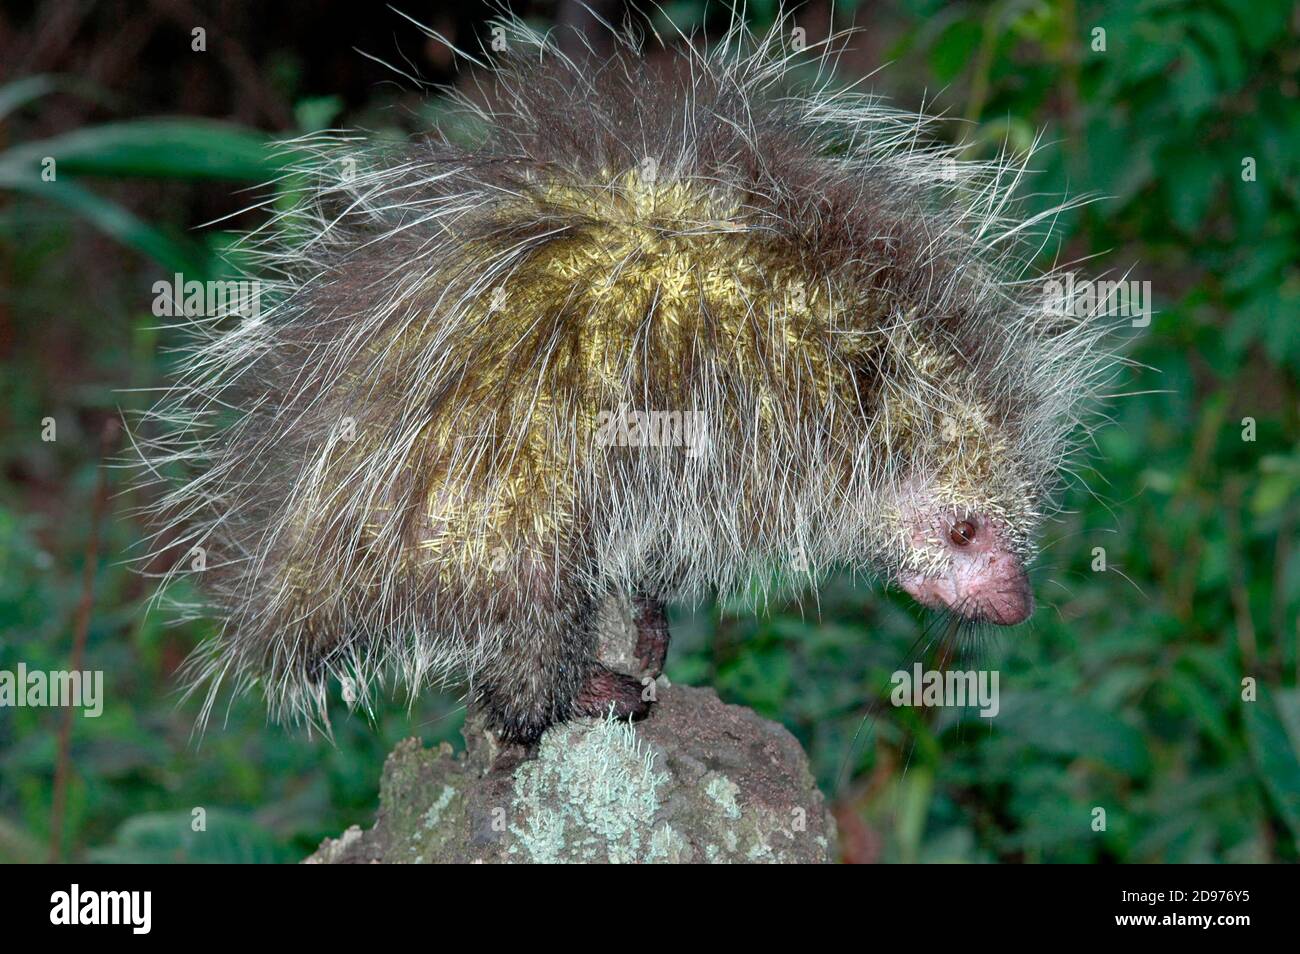 Black-tailed Hairy Dwarf Porcupine (Coendou melanurus), French Guyana Stock Photo